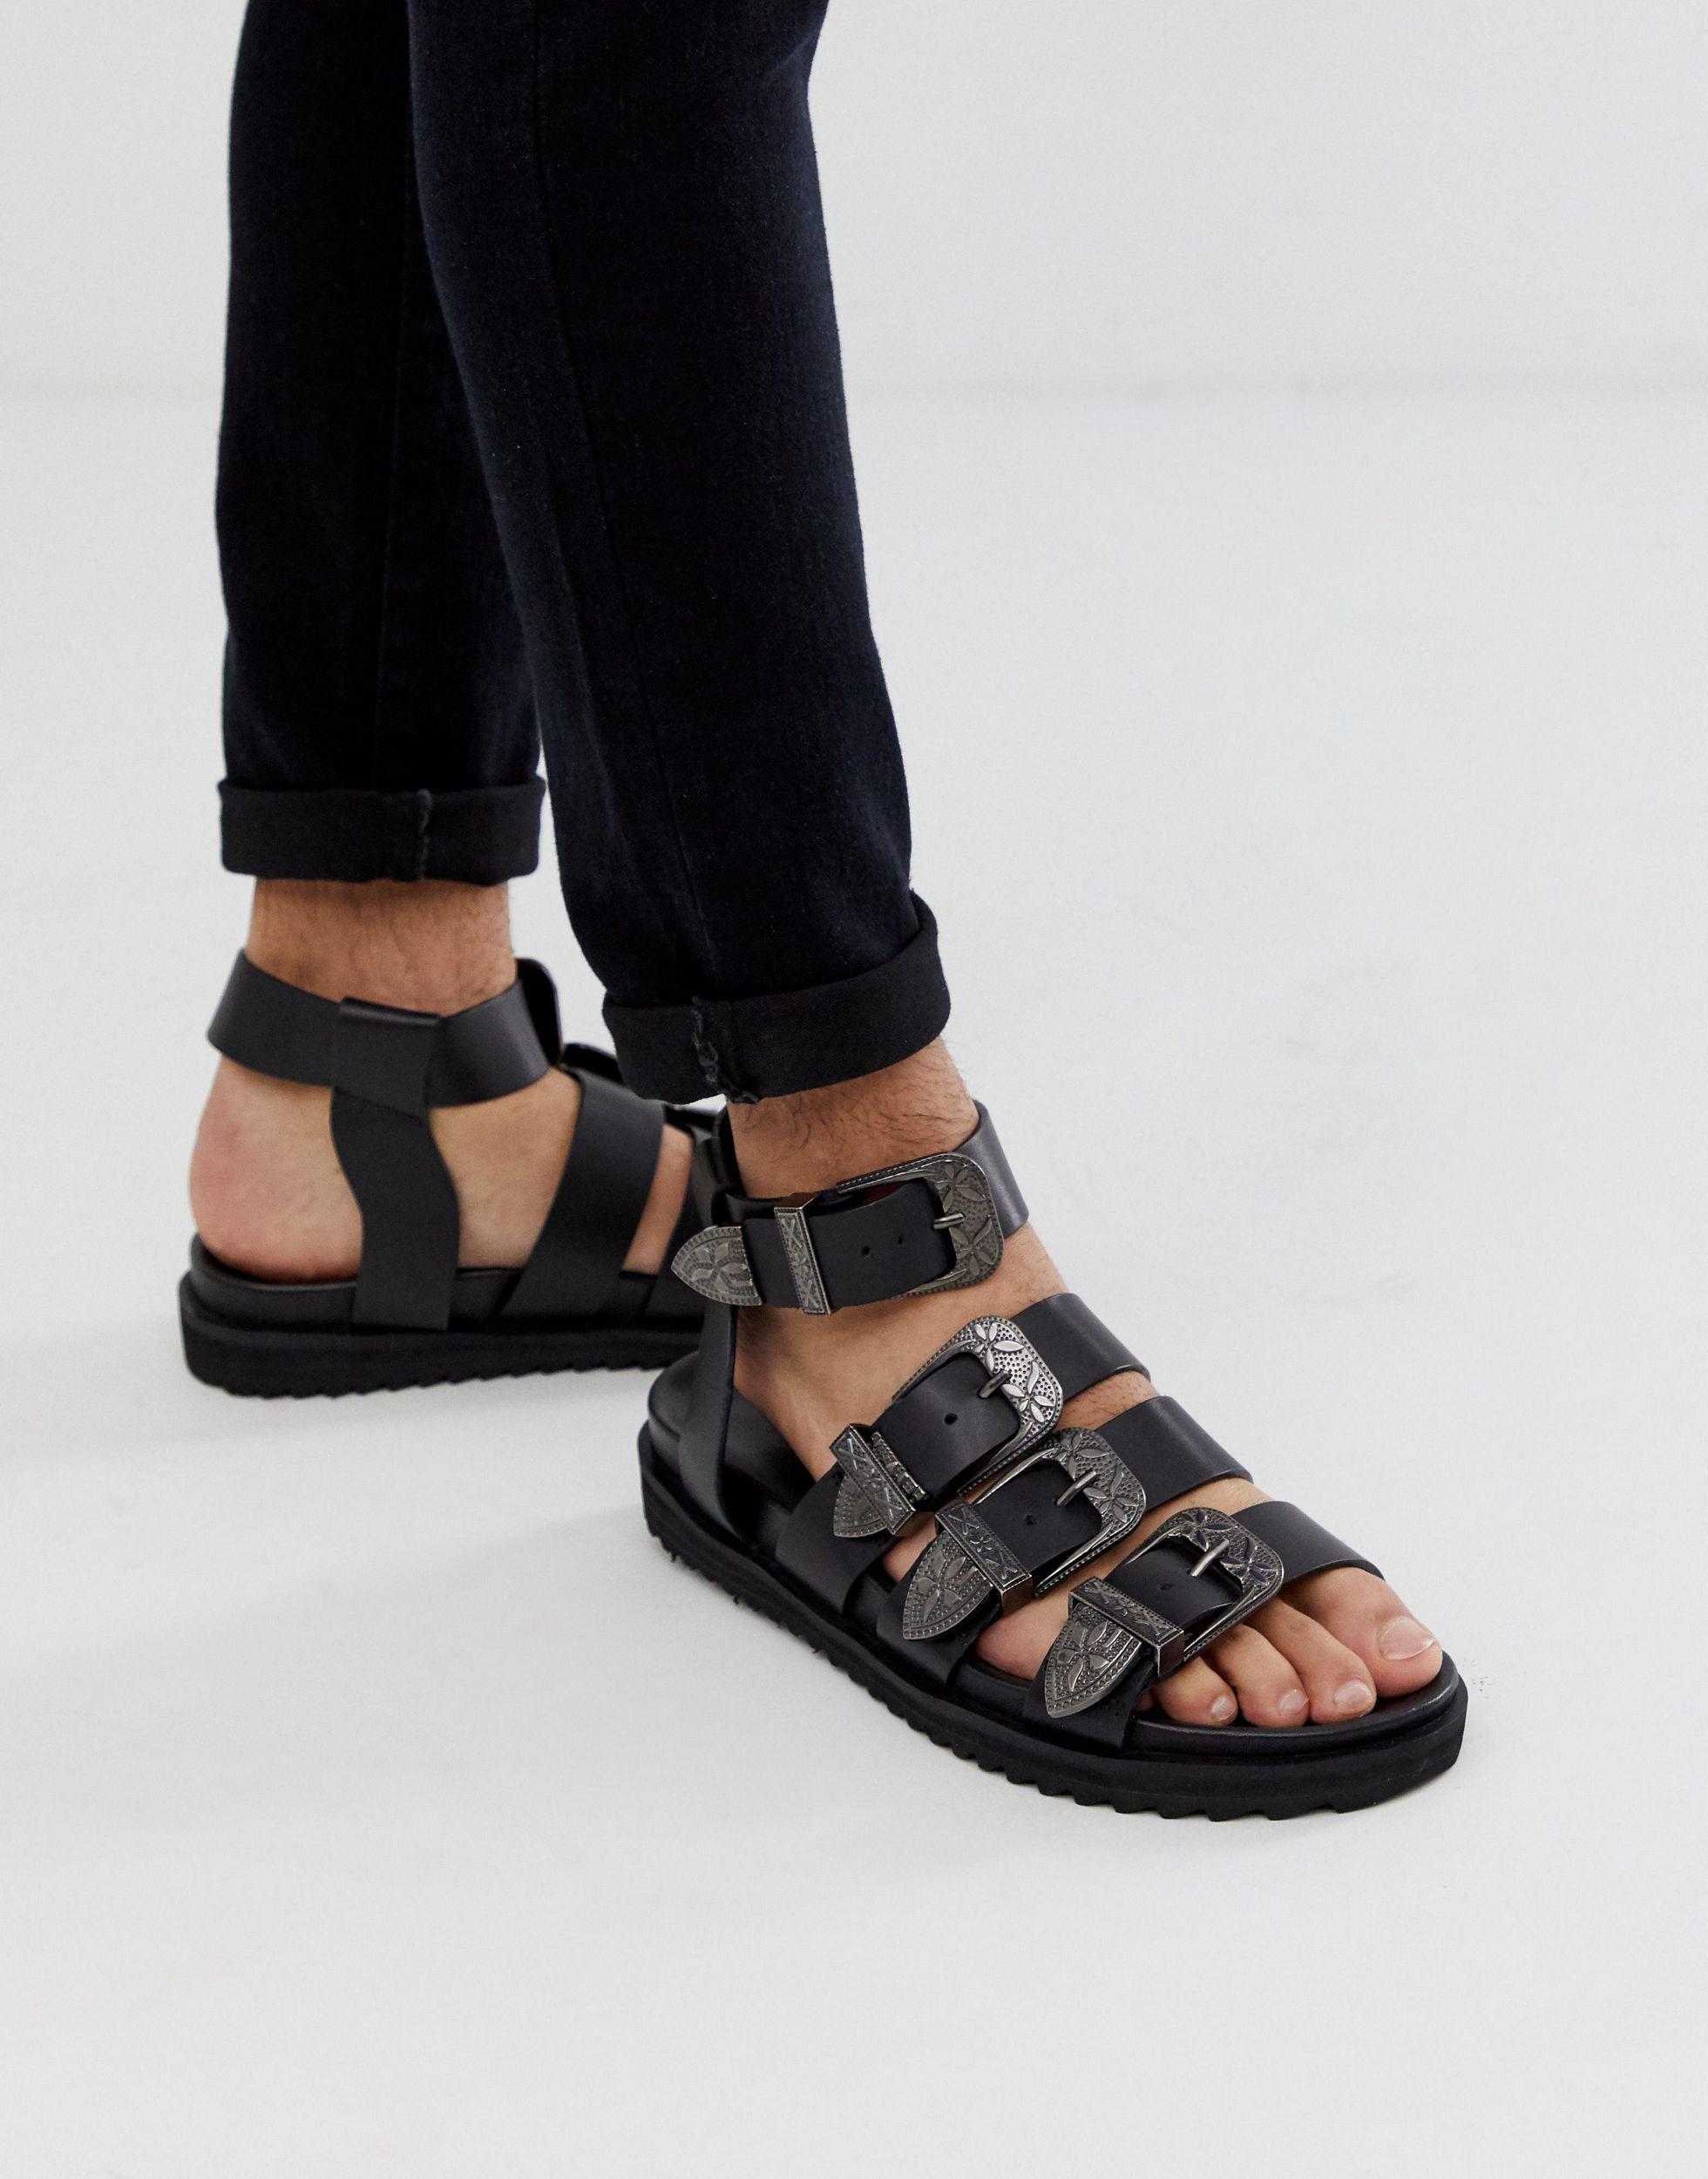 ASOS Leather Gladiator Sandals in Black for Men - Lyst